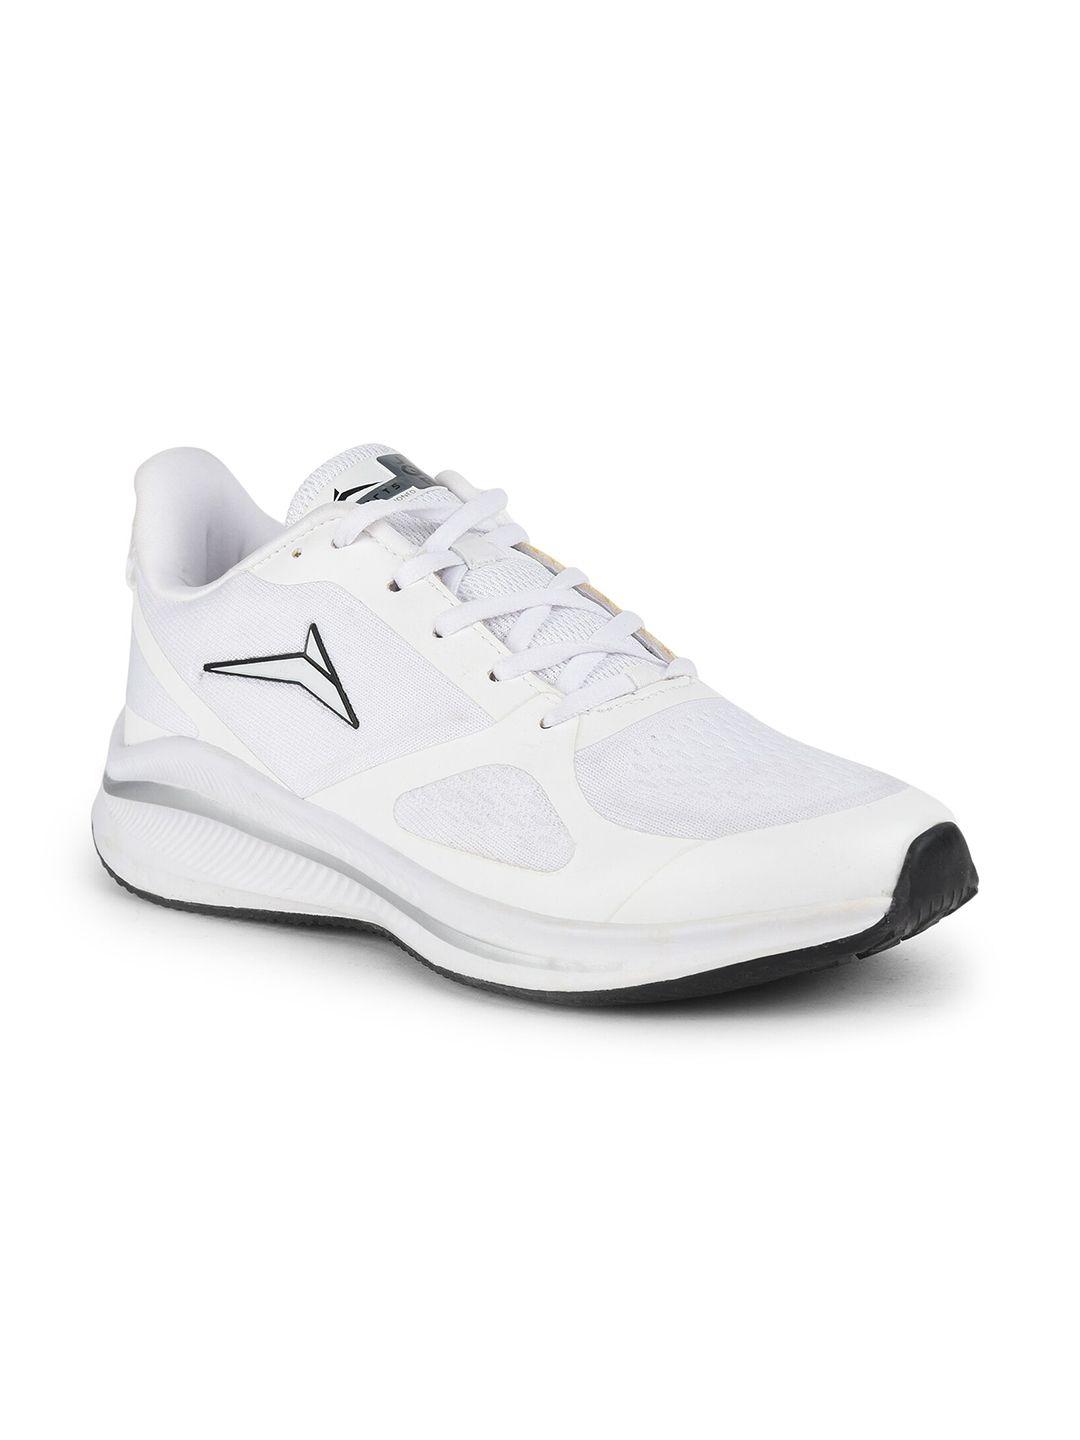 jqr men white mesh high-top running shoes